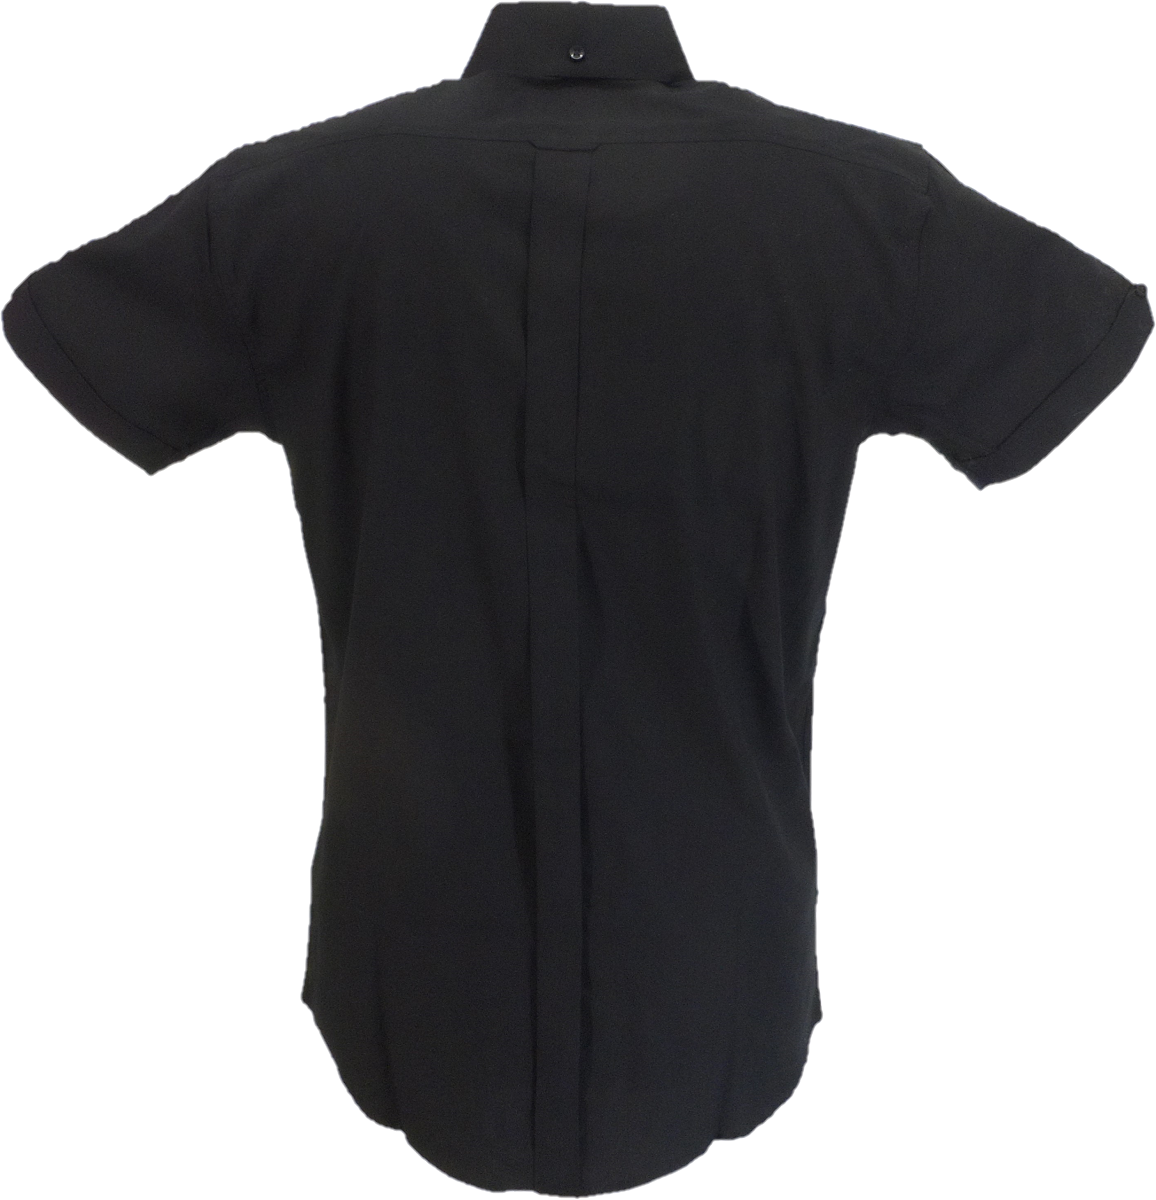 Camisas con botones mod retro de manga corta de algodón Oxford negro Relco